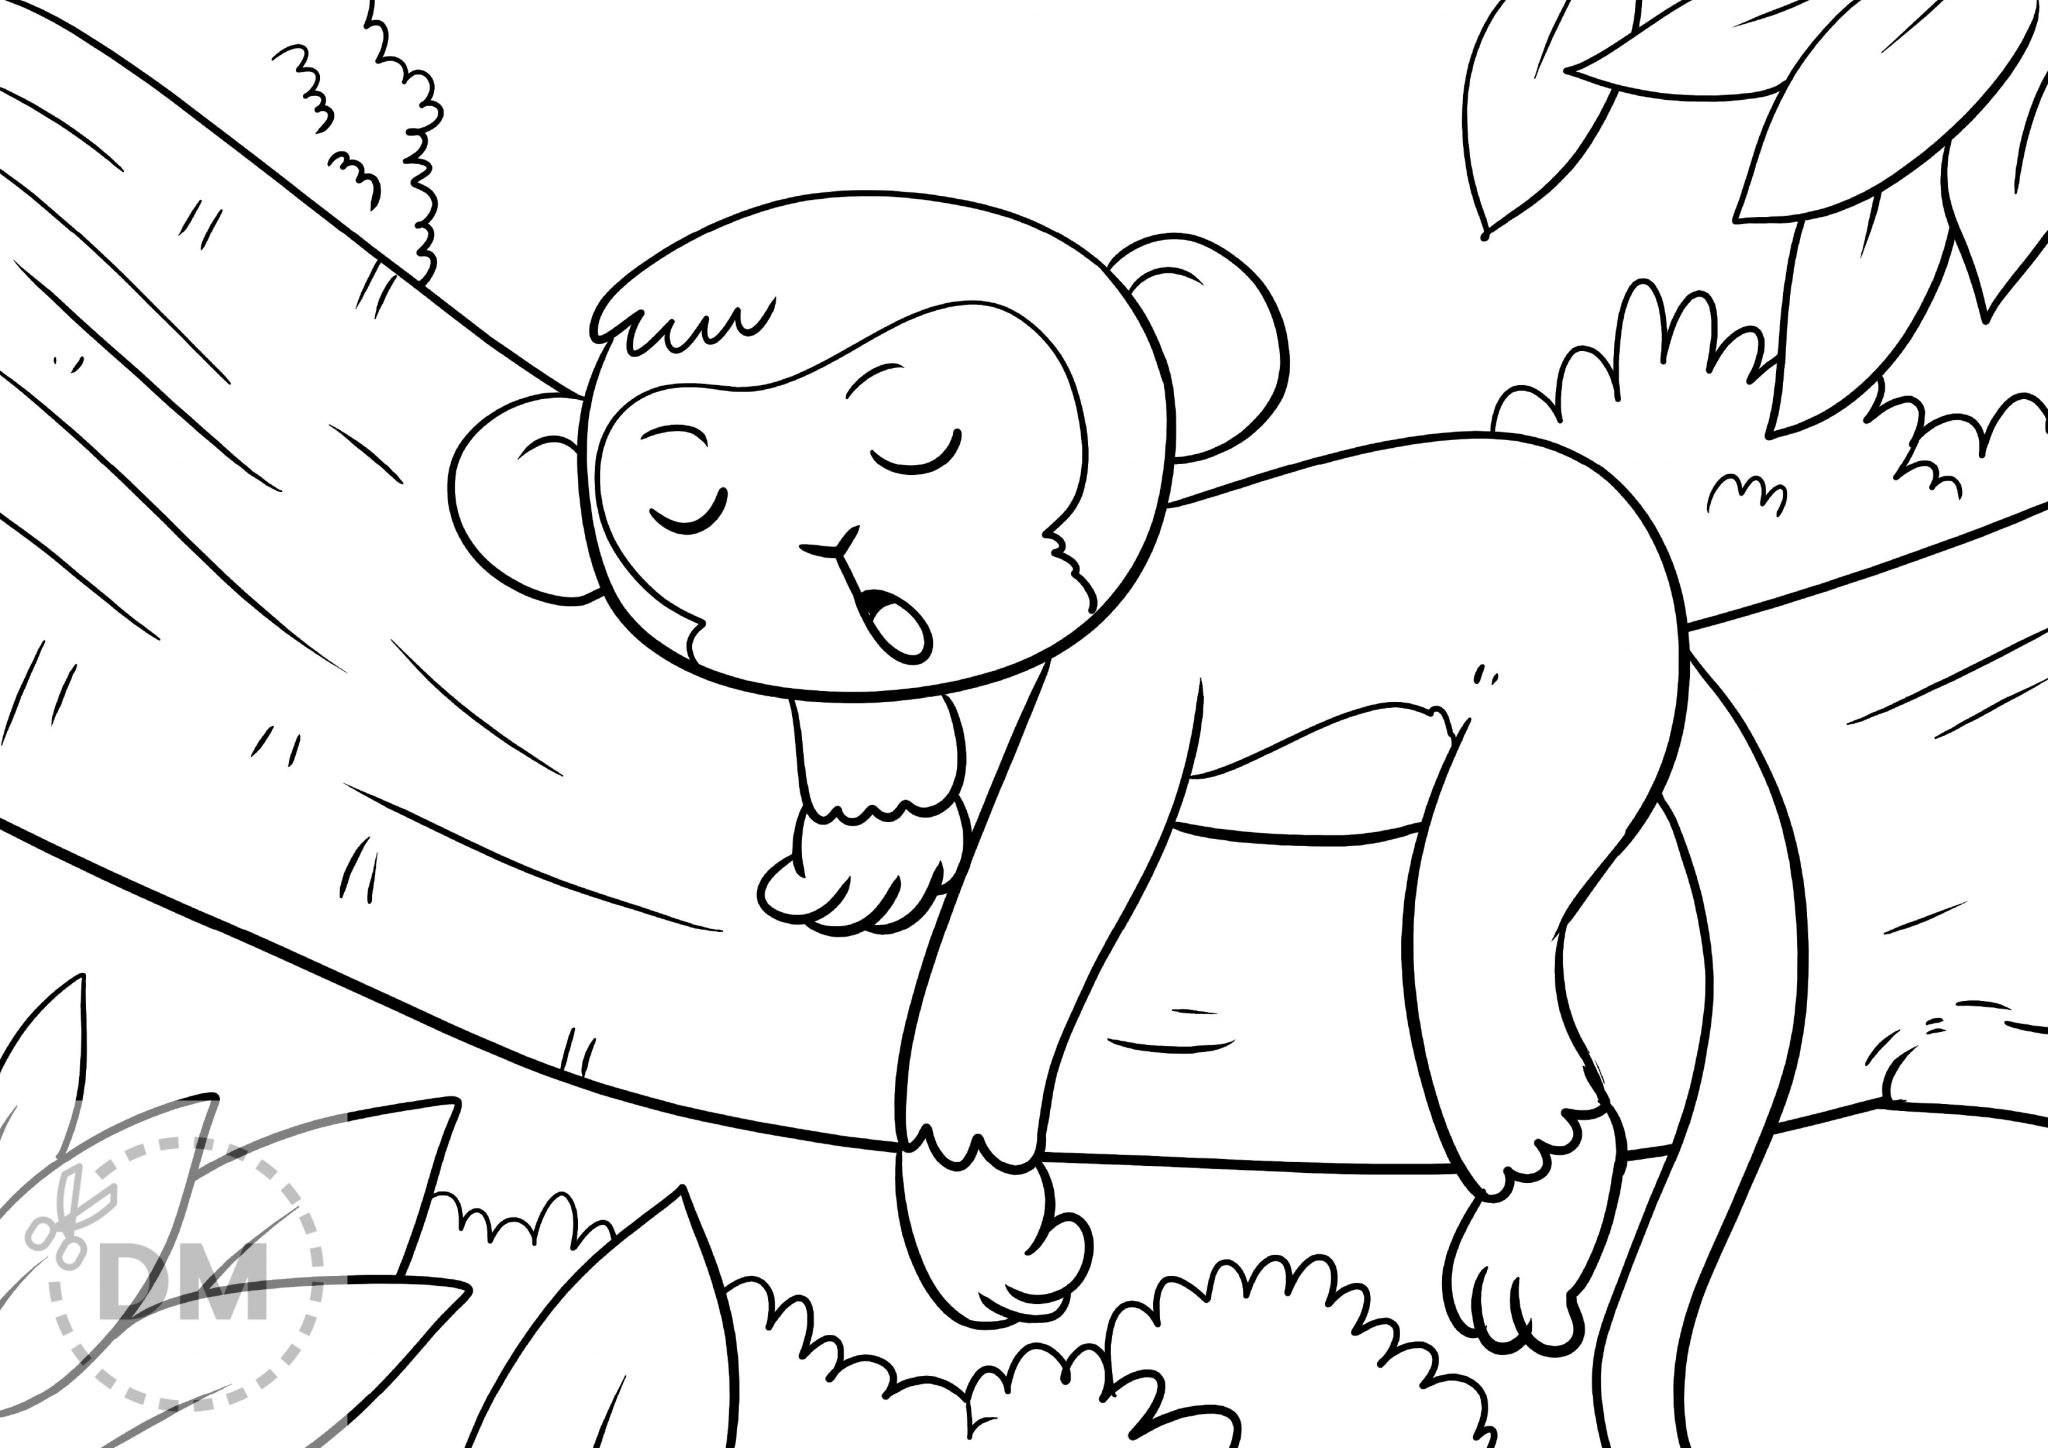 Cute Monkey Coloring Page | Free Printable Sheet - diy-magazine.com